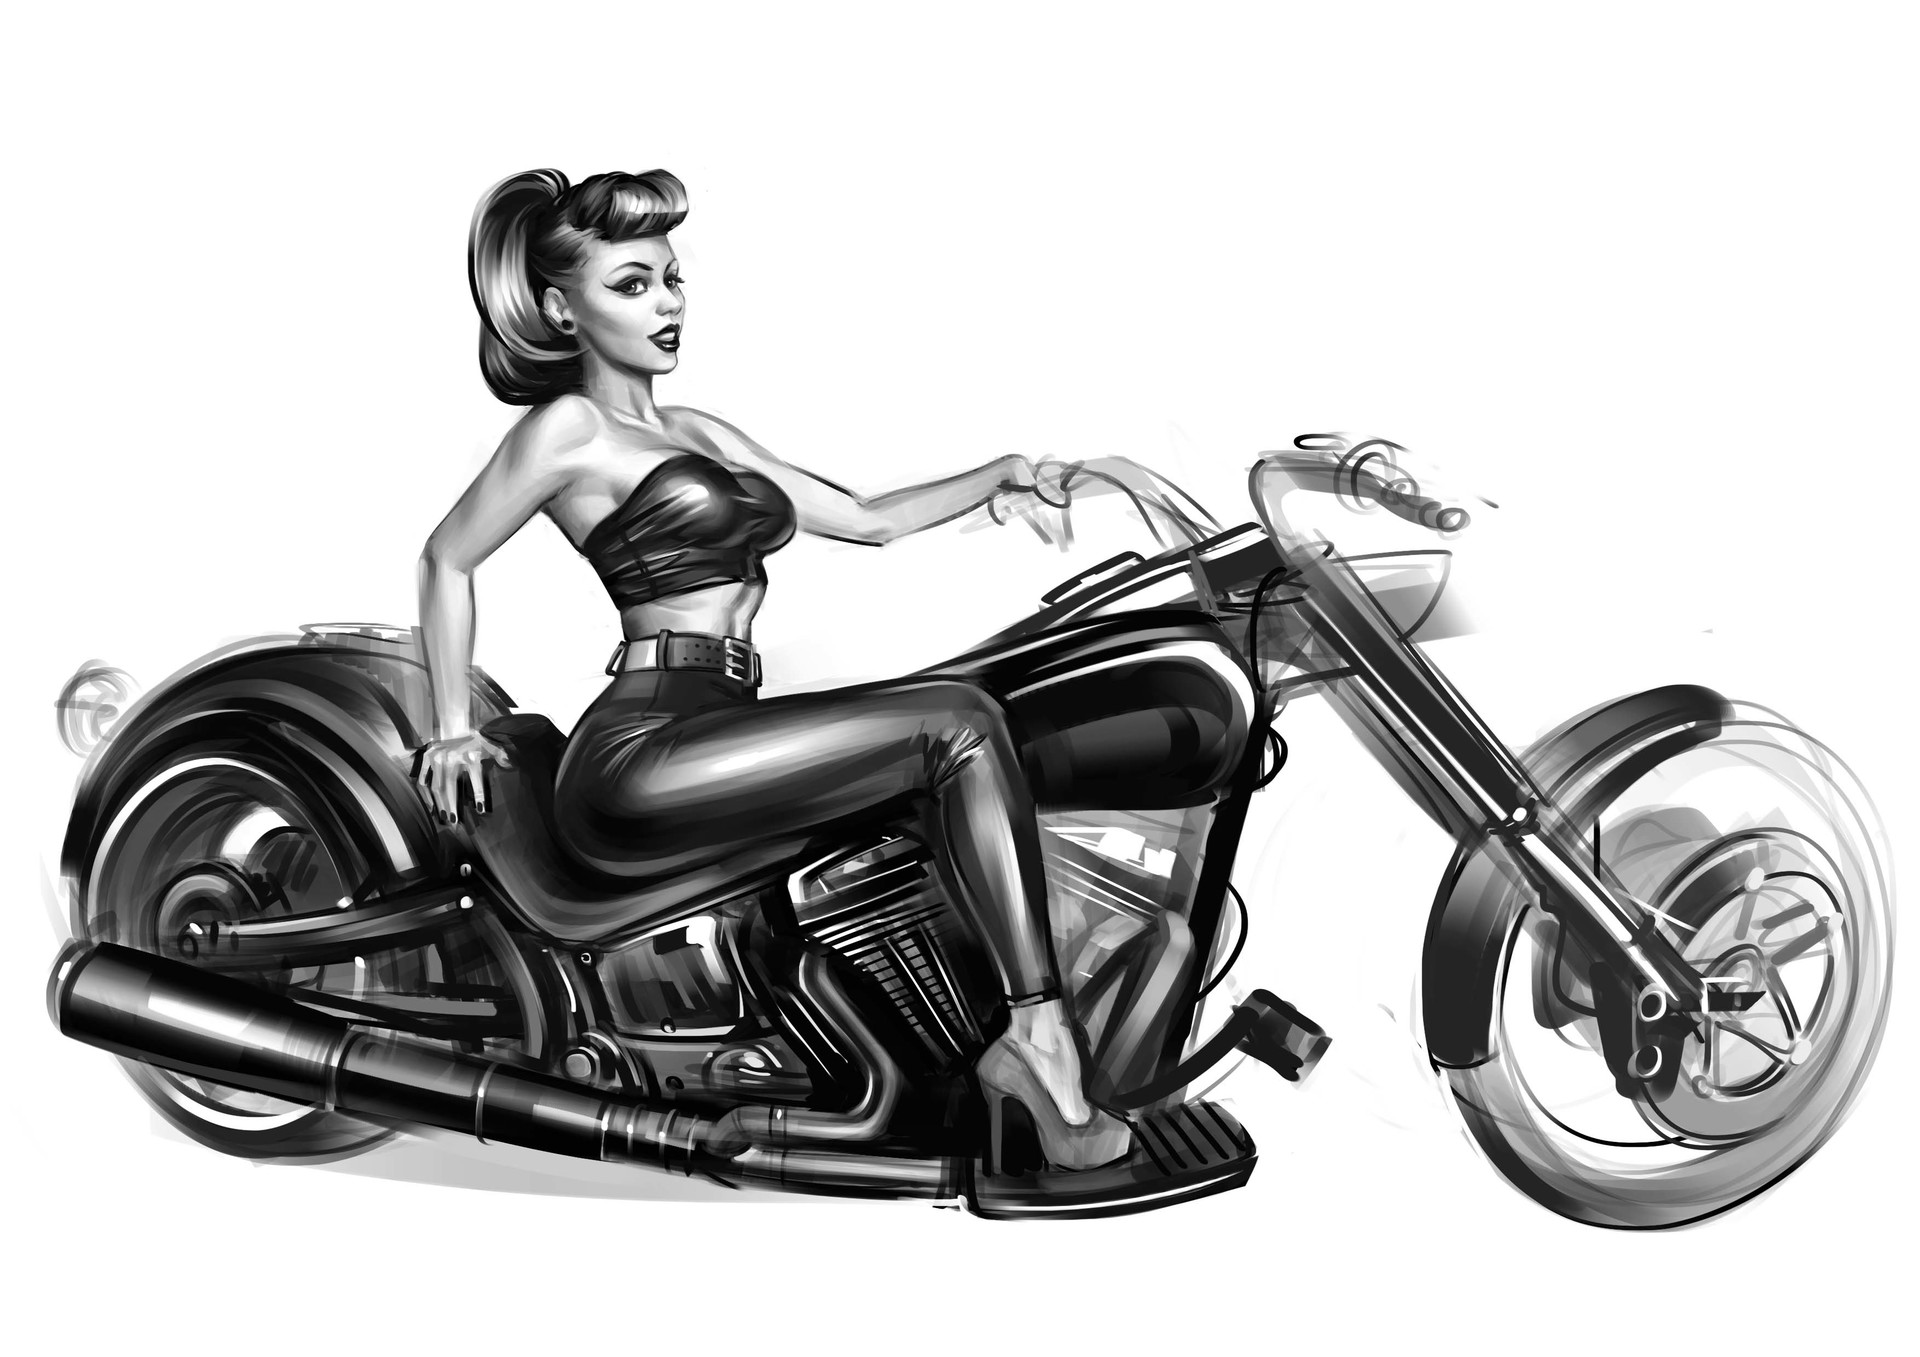 General 1920x1357 Aleksandr Sidelnikov biker motorcycle pinup models women monochrome simple background women with motorcycles